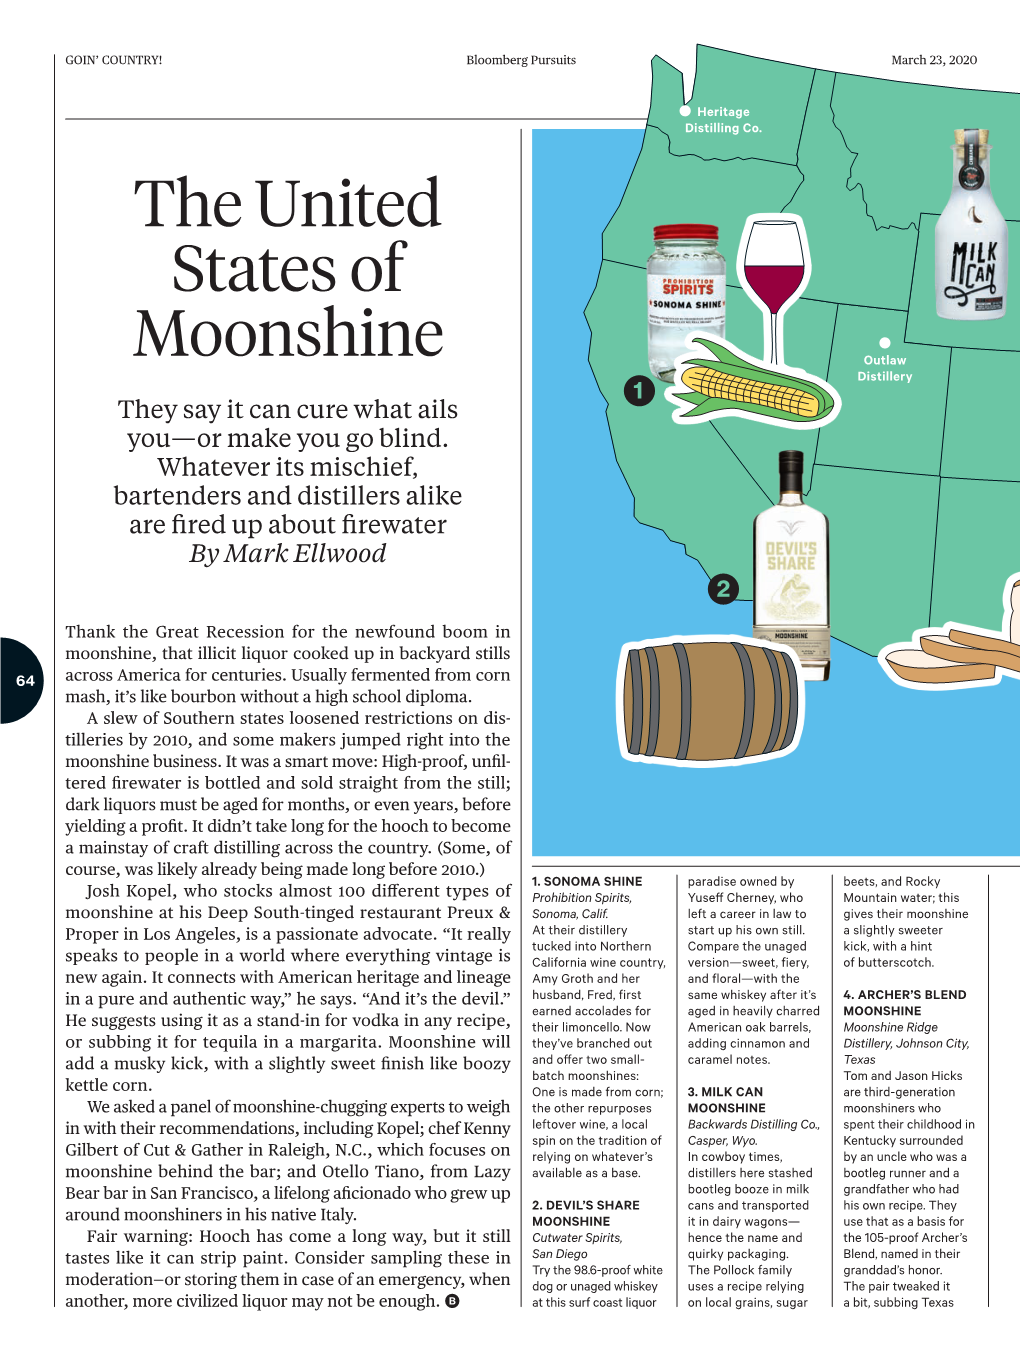 The United States of Moonshine